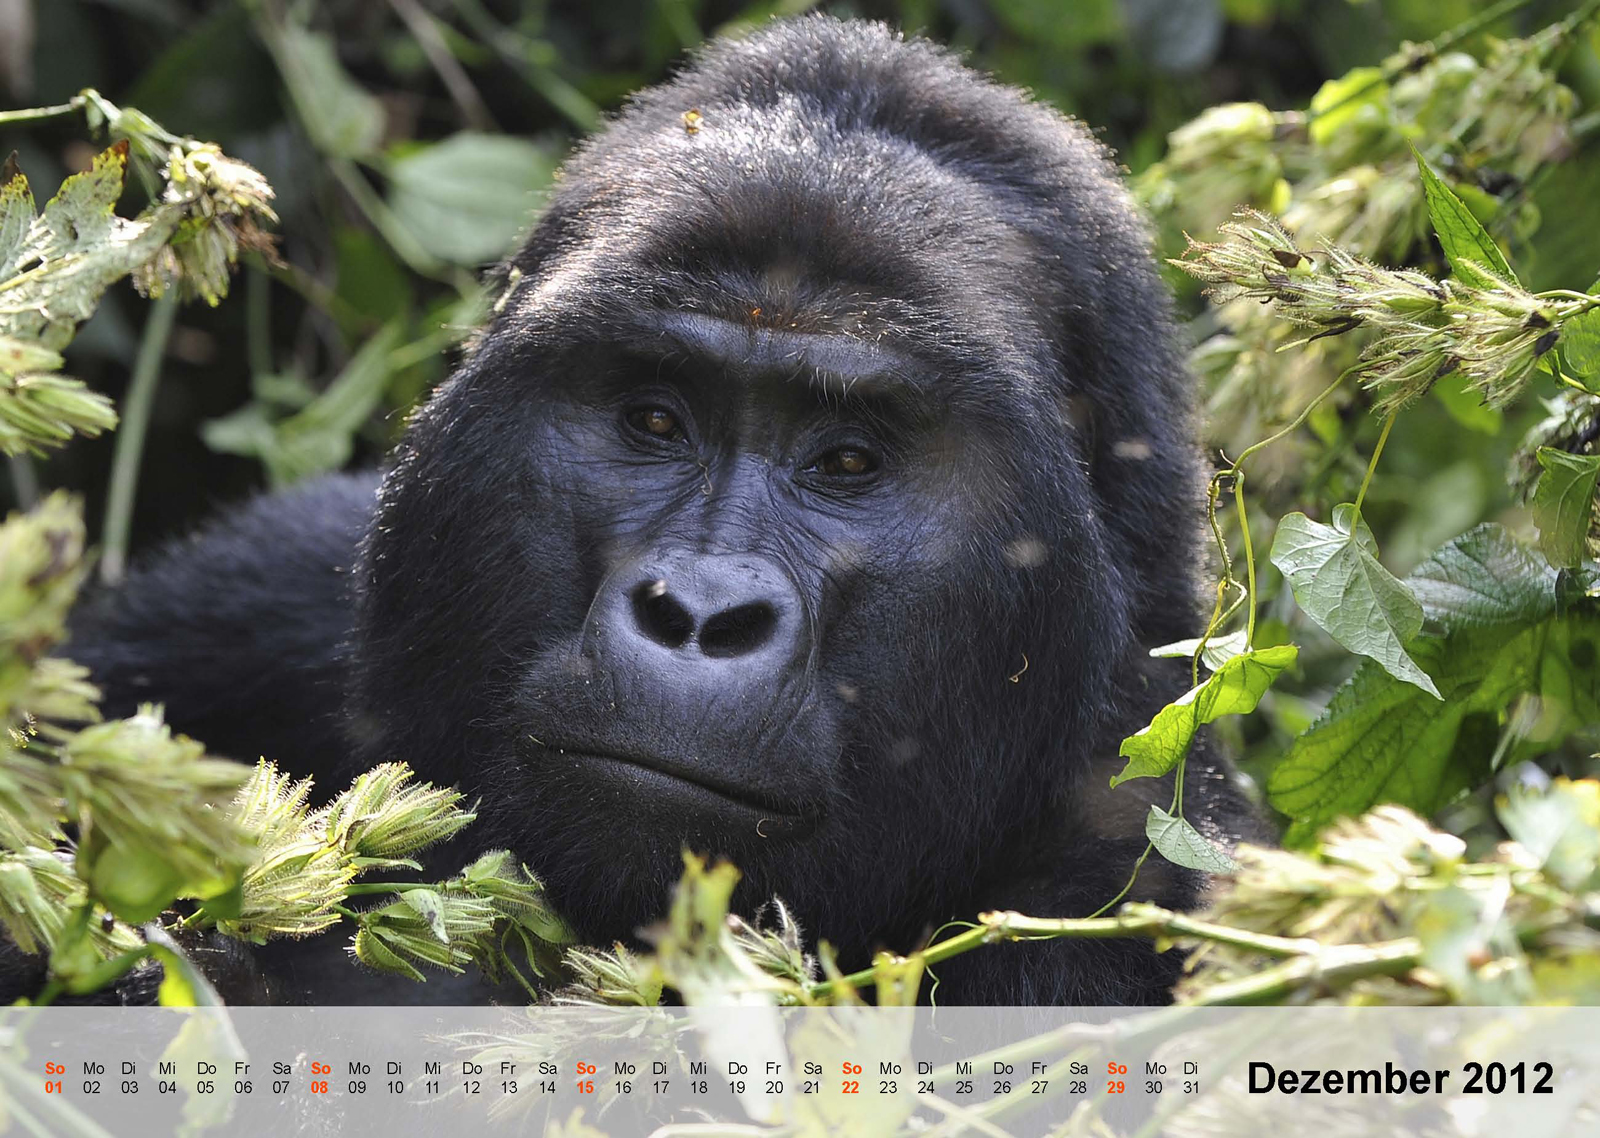 Berggorilla | Mountain gorilla | Bwindi Impenetrable National Park | Uganda - Kalender 2012 - Dezember